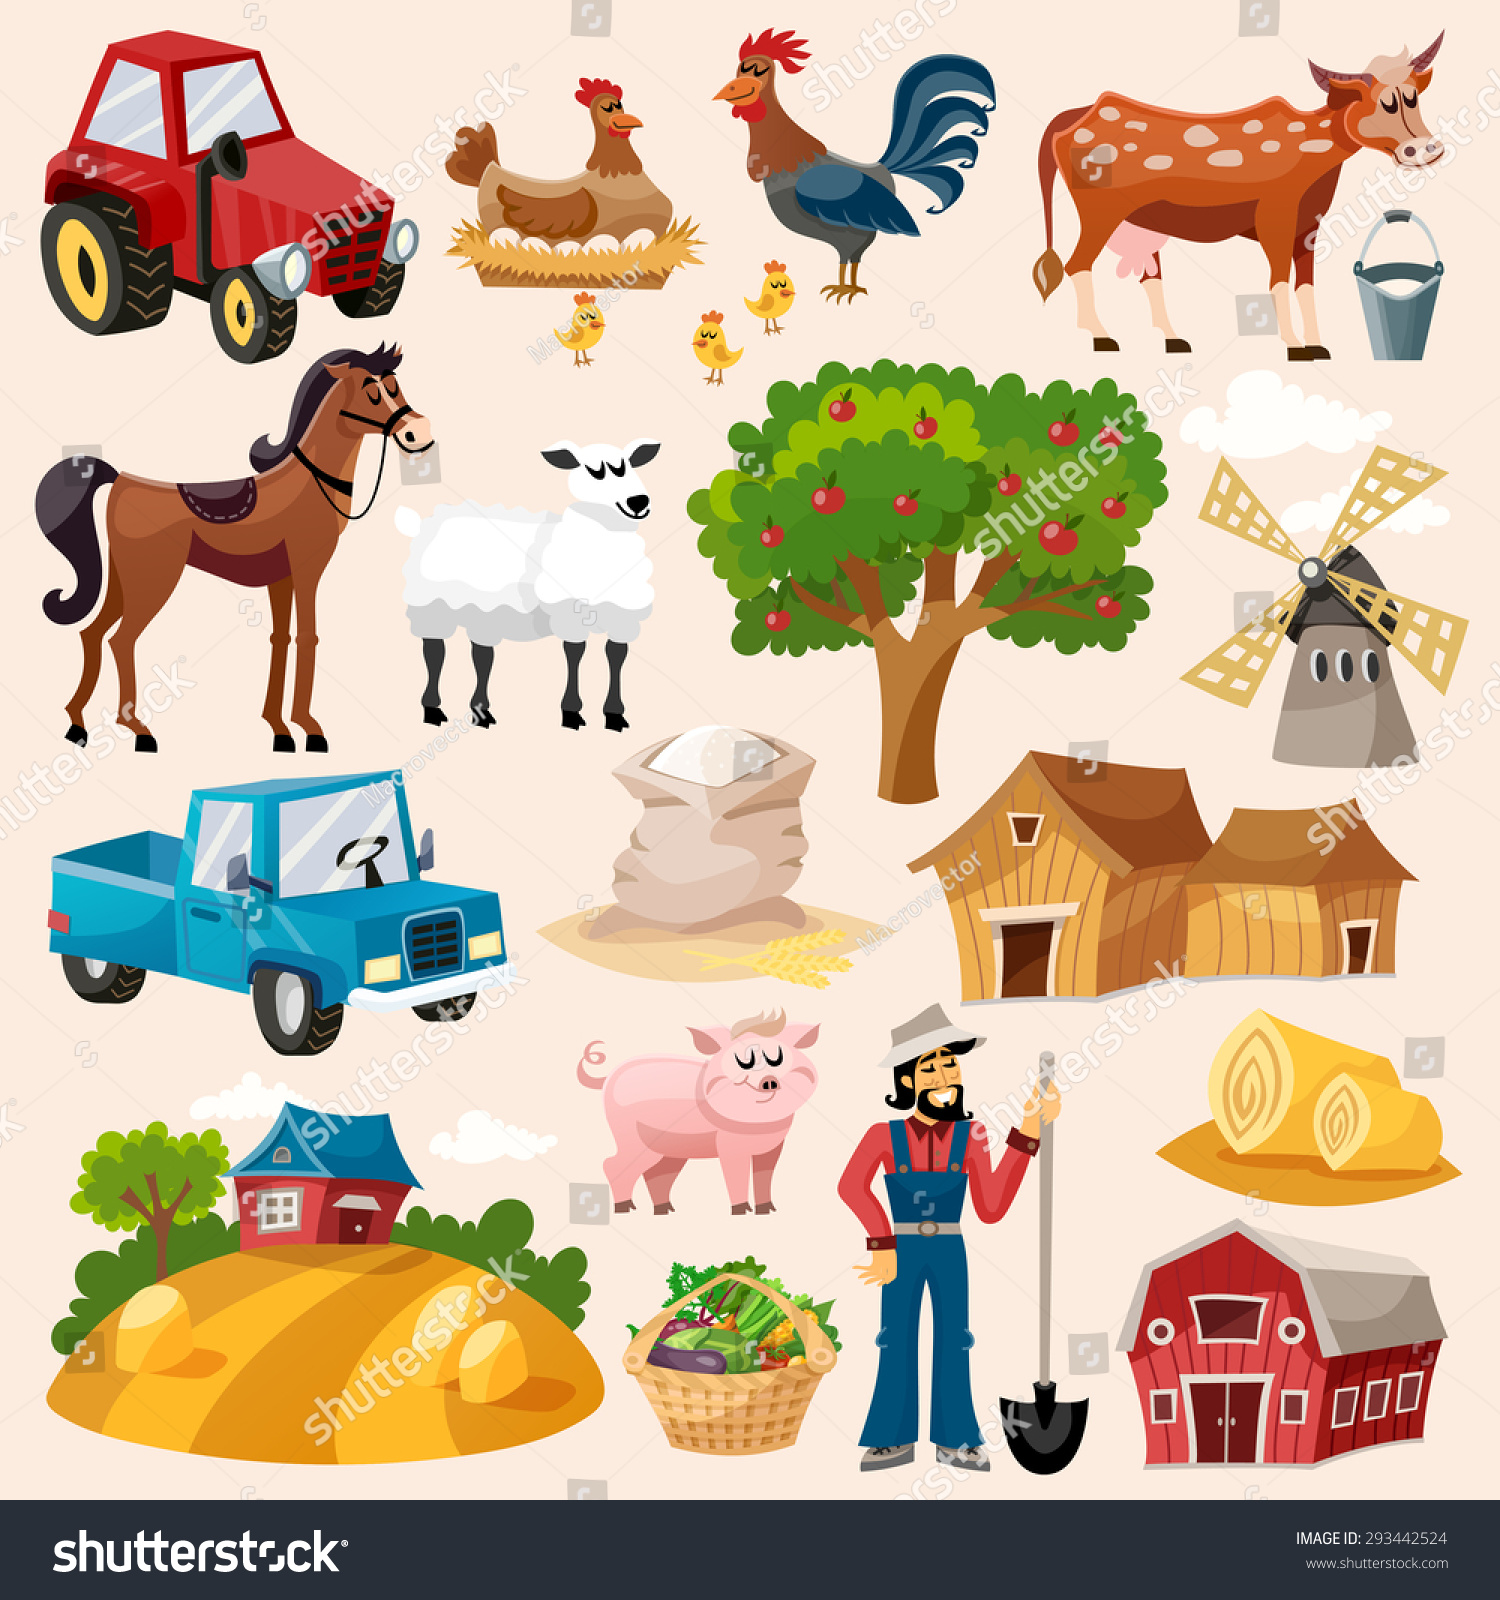  Farming farm decorative icon set with windmill cow pig and farmer